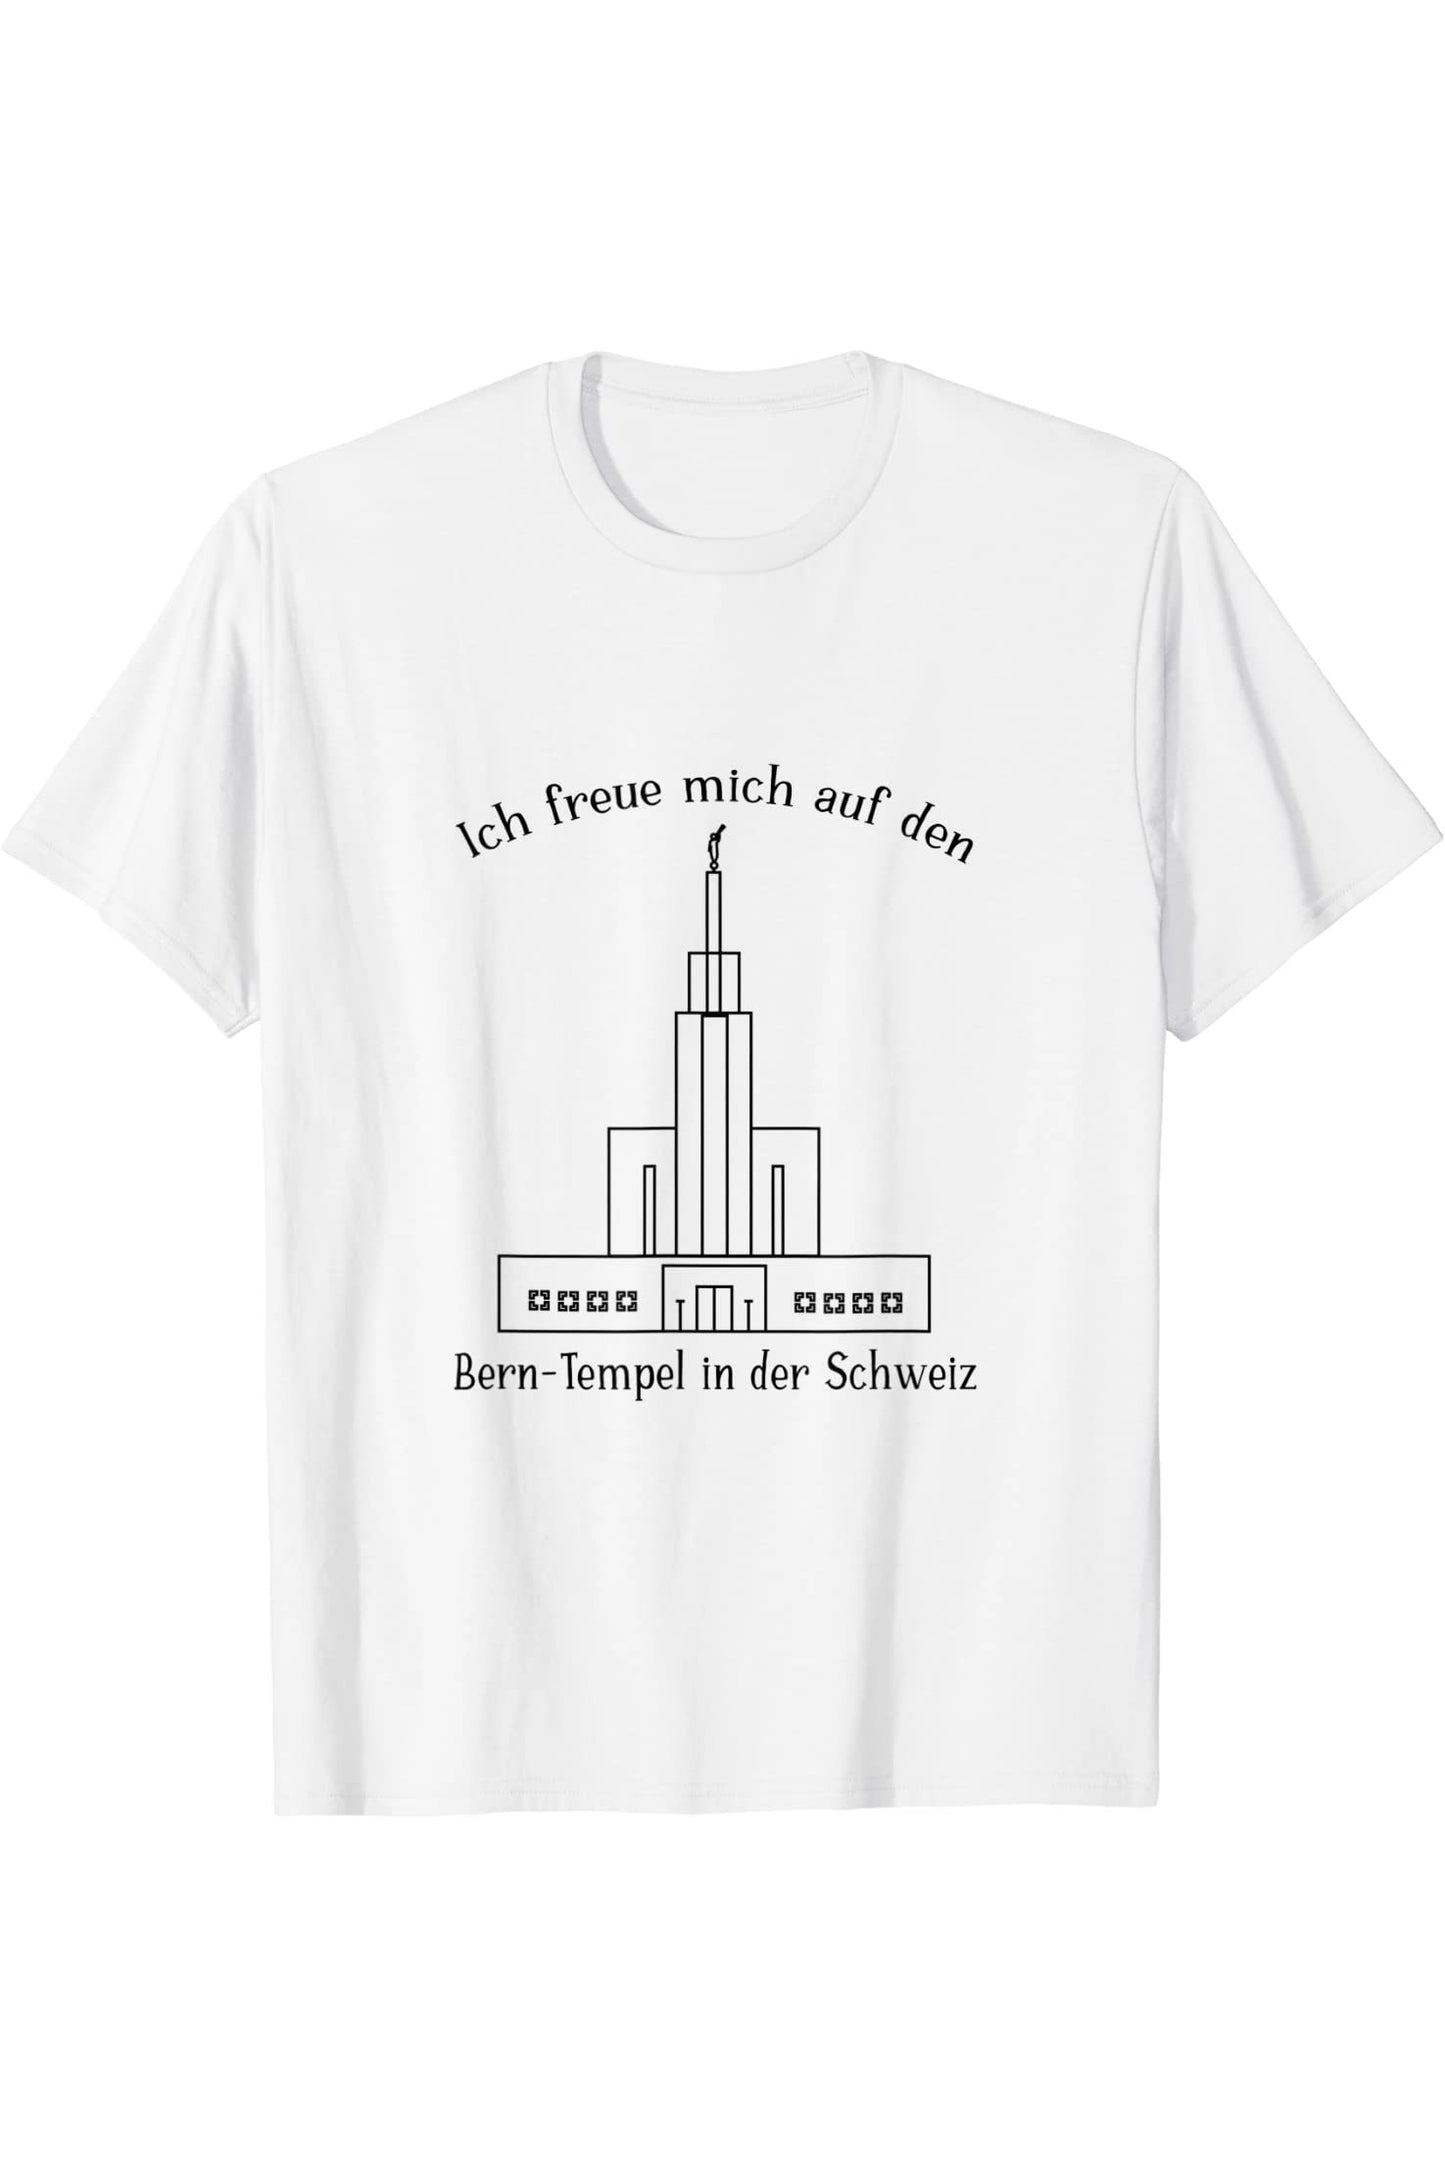 Bern Switzerland Temple T-Shirt - Happy Style (German) US